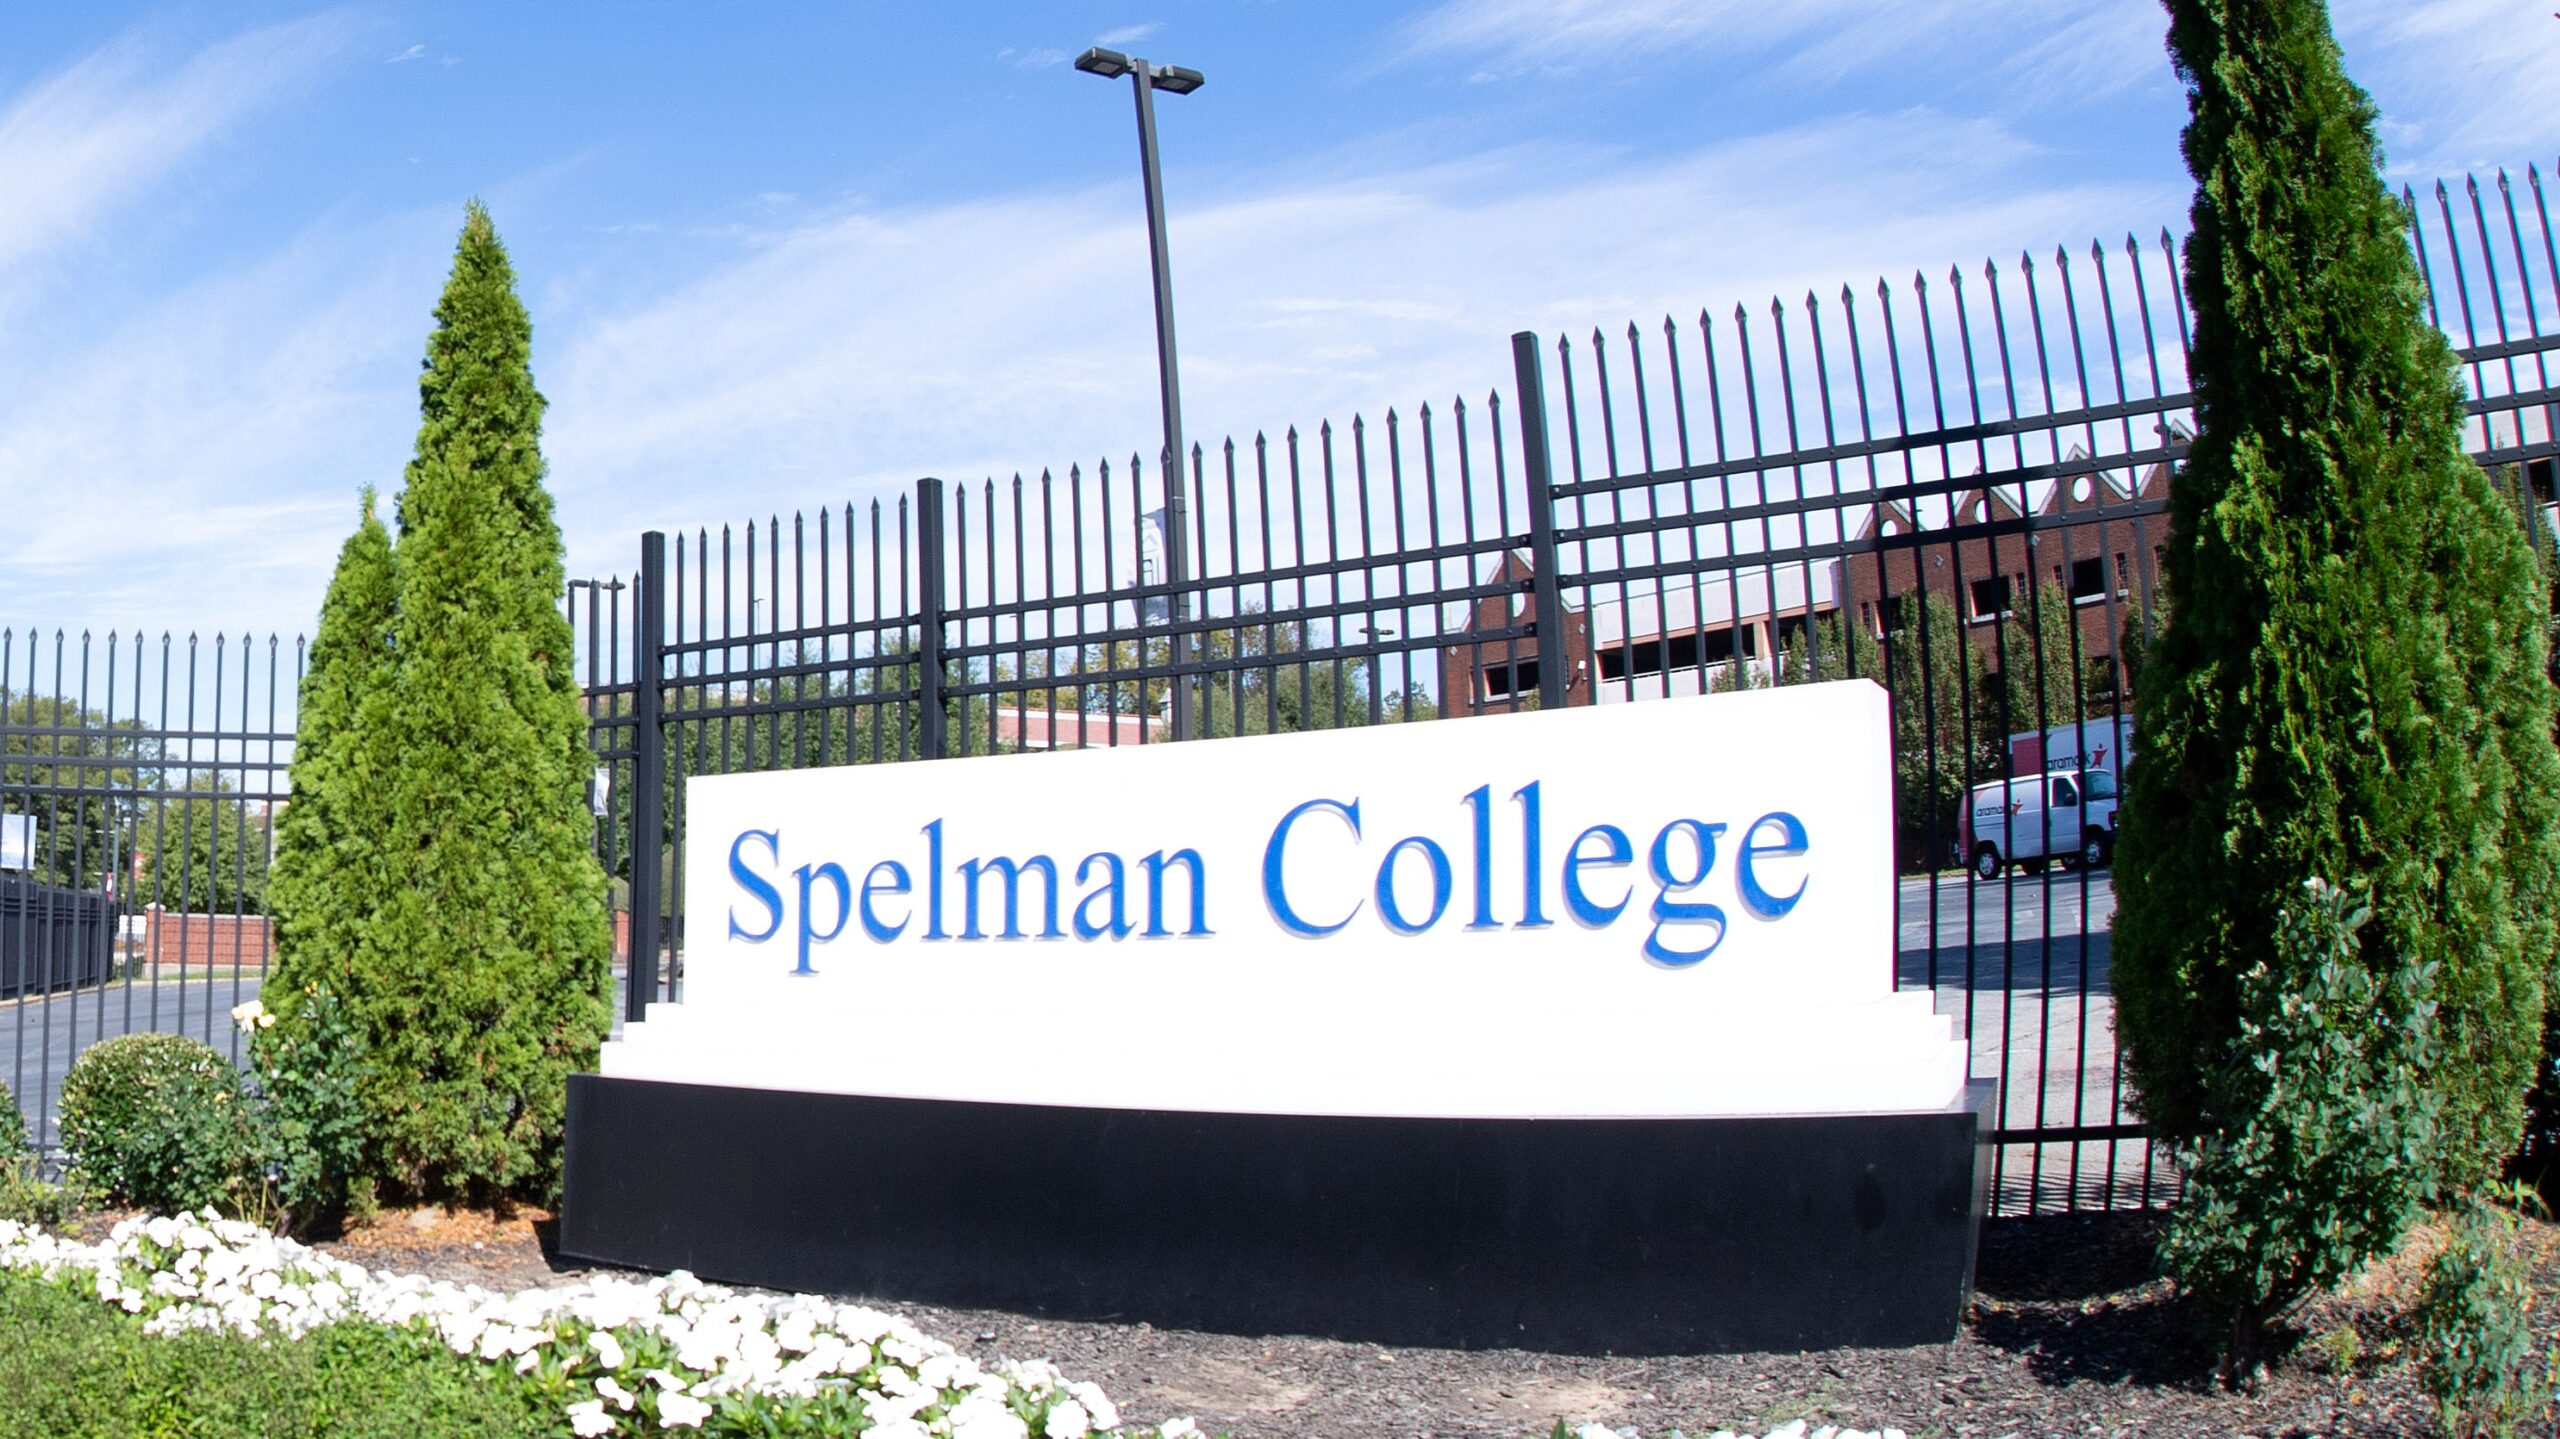 Spelman College, Hampton University Amongst Several HBCUs Receiving Bomb Threats